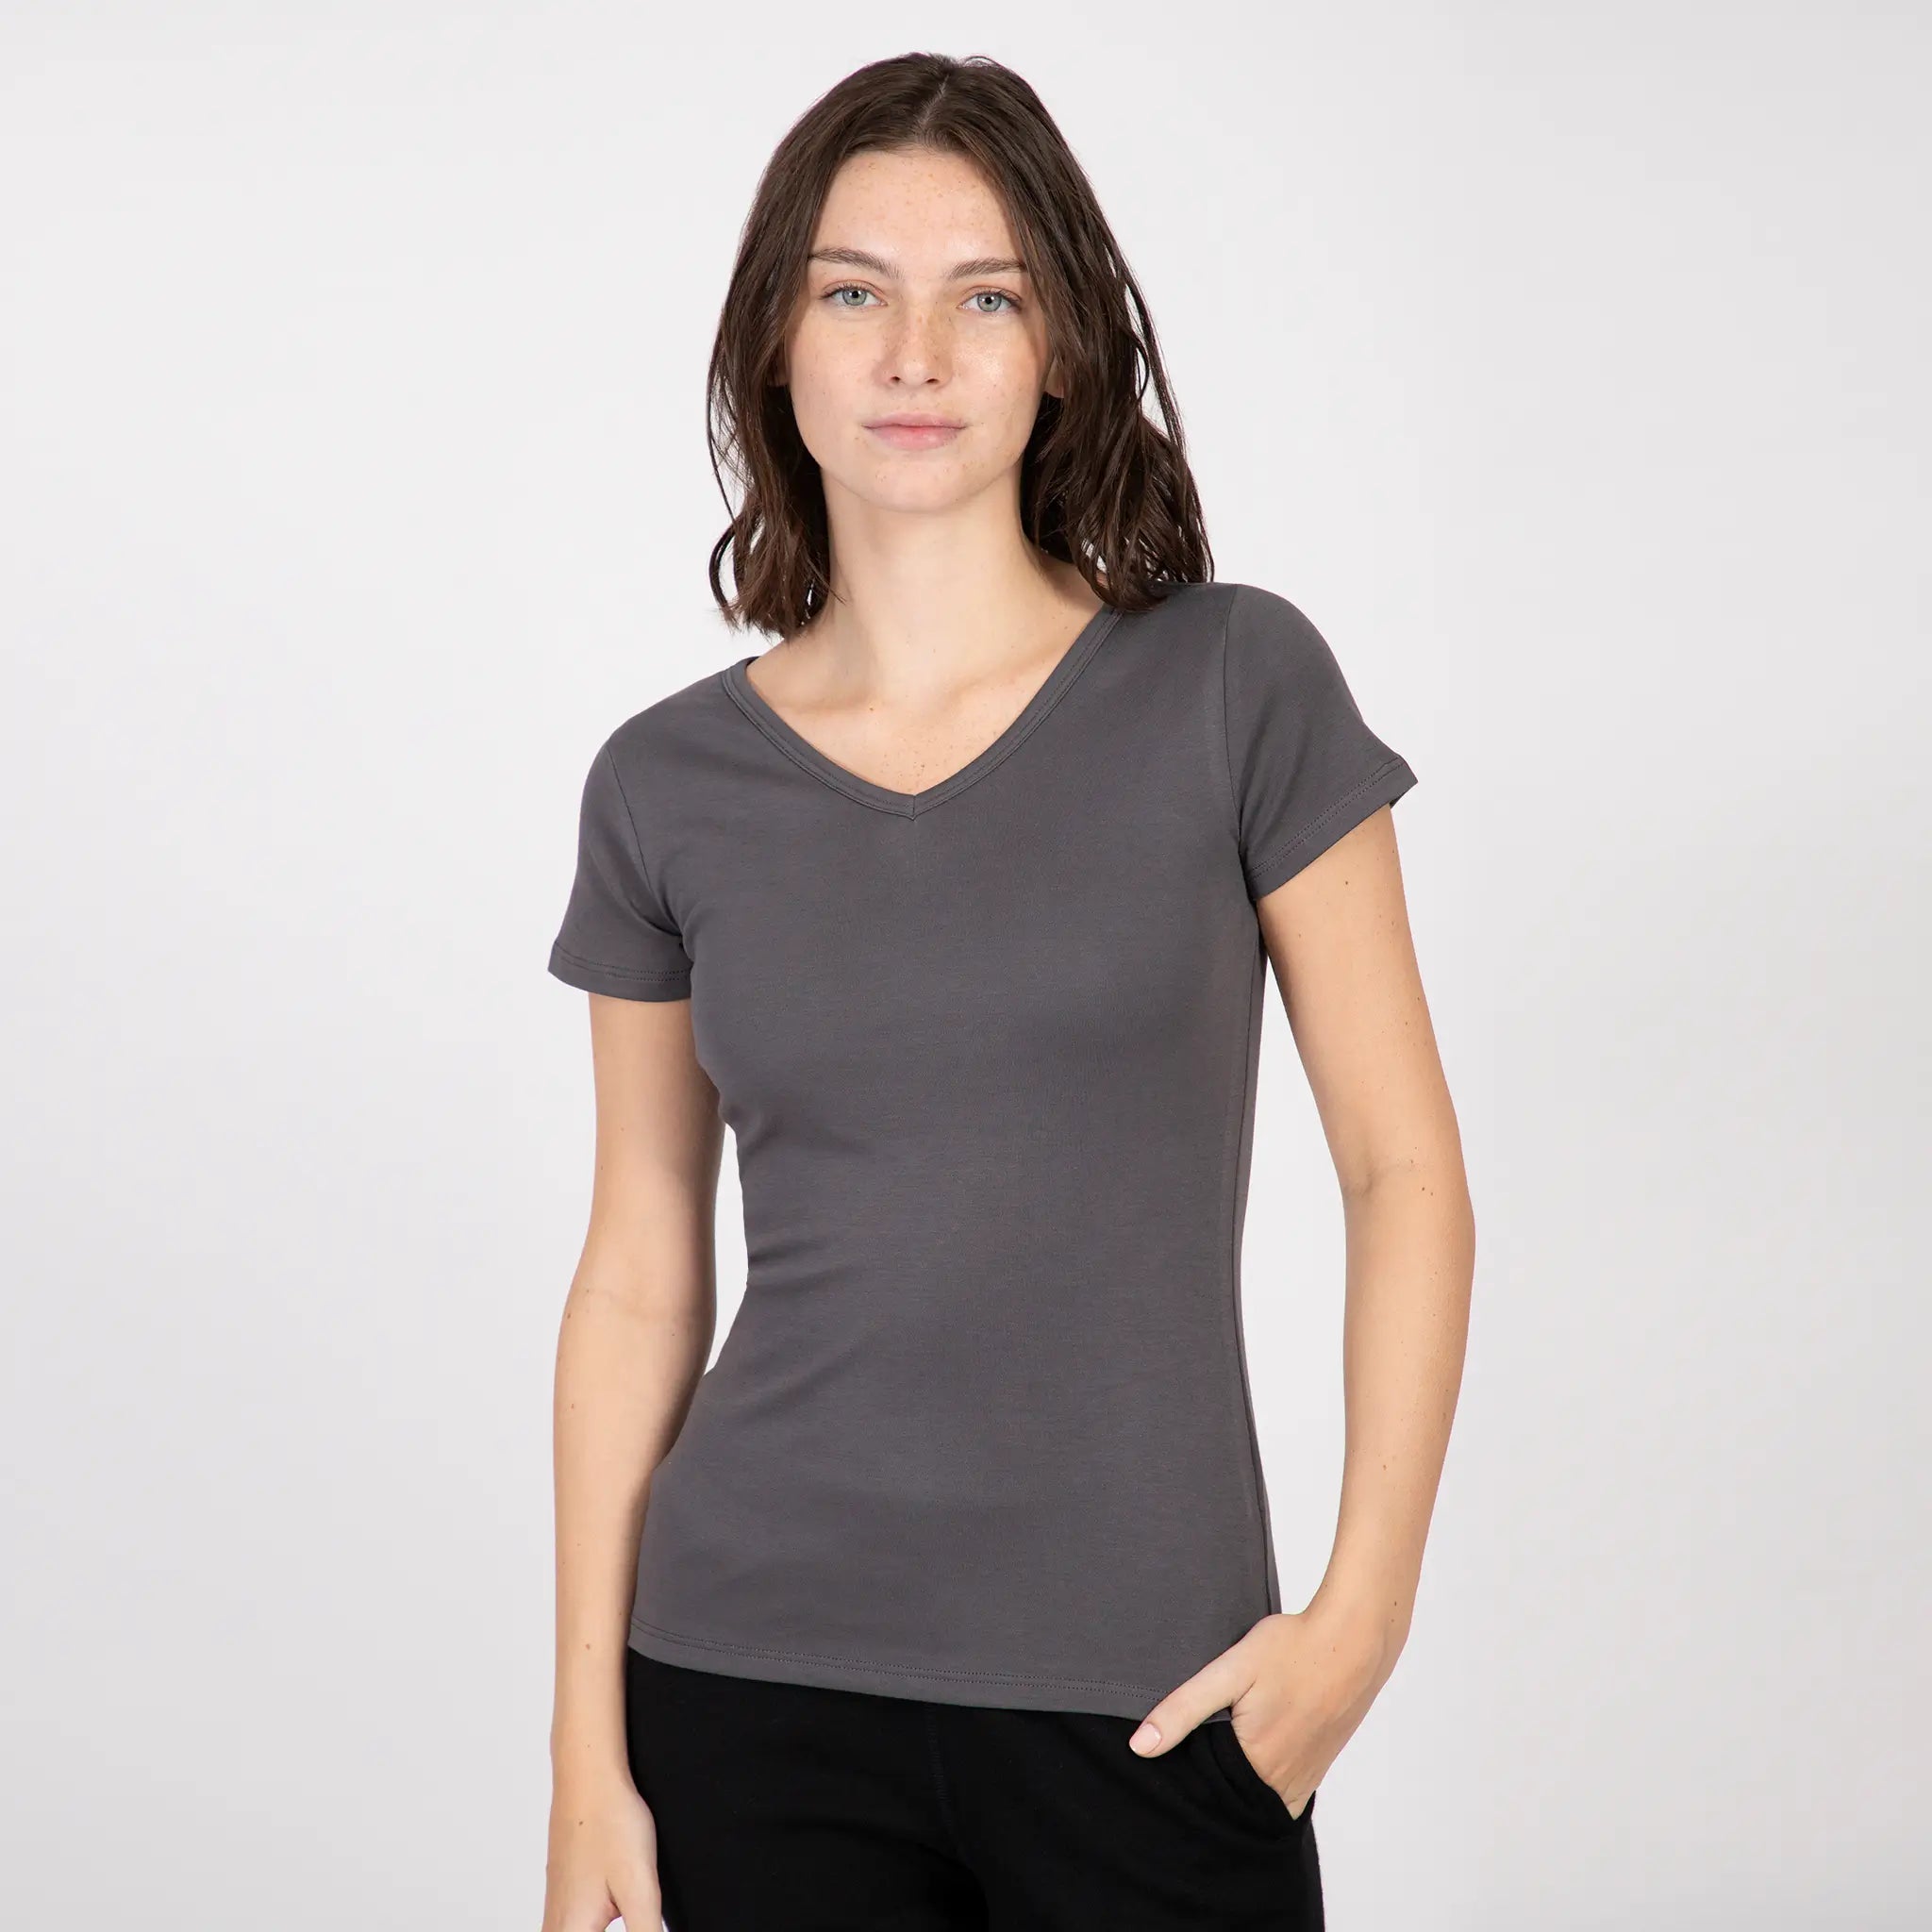 womens ultra soft tshirt vneck color gray